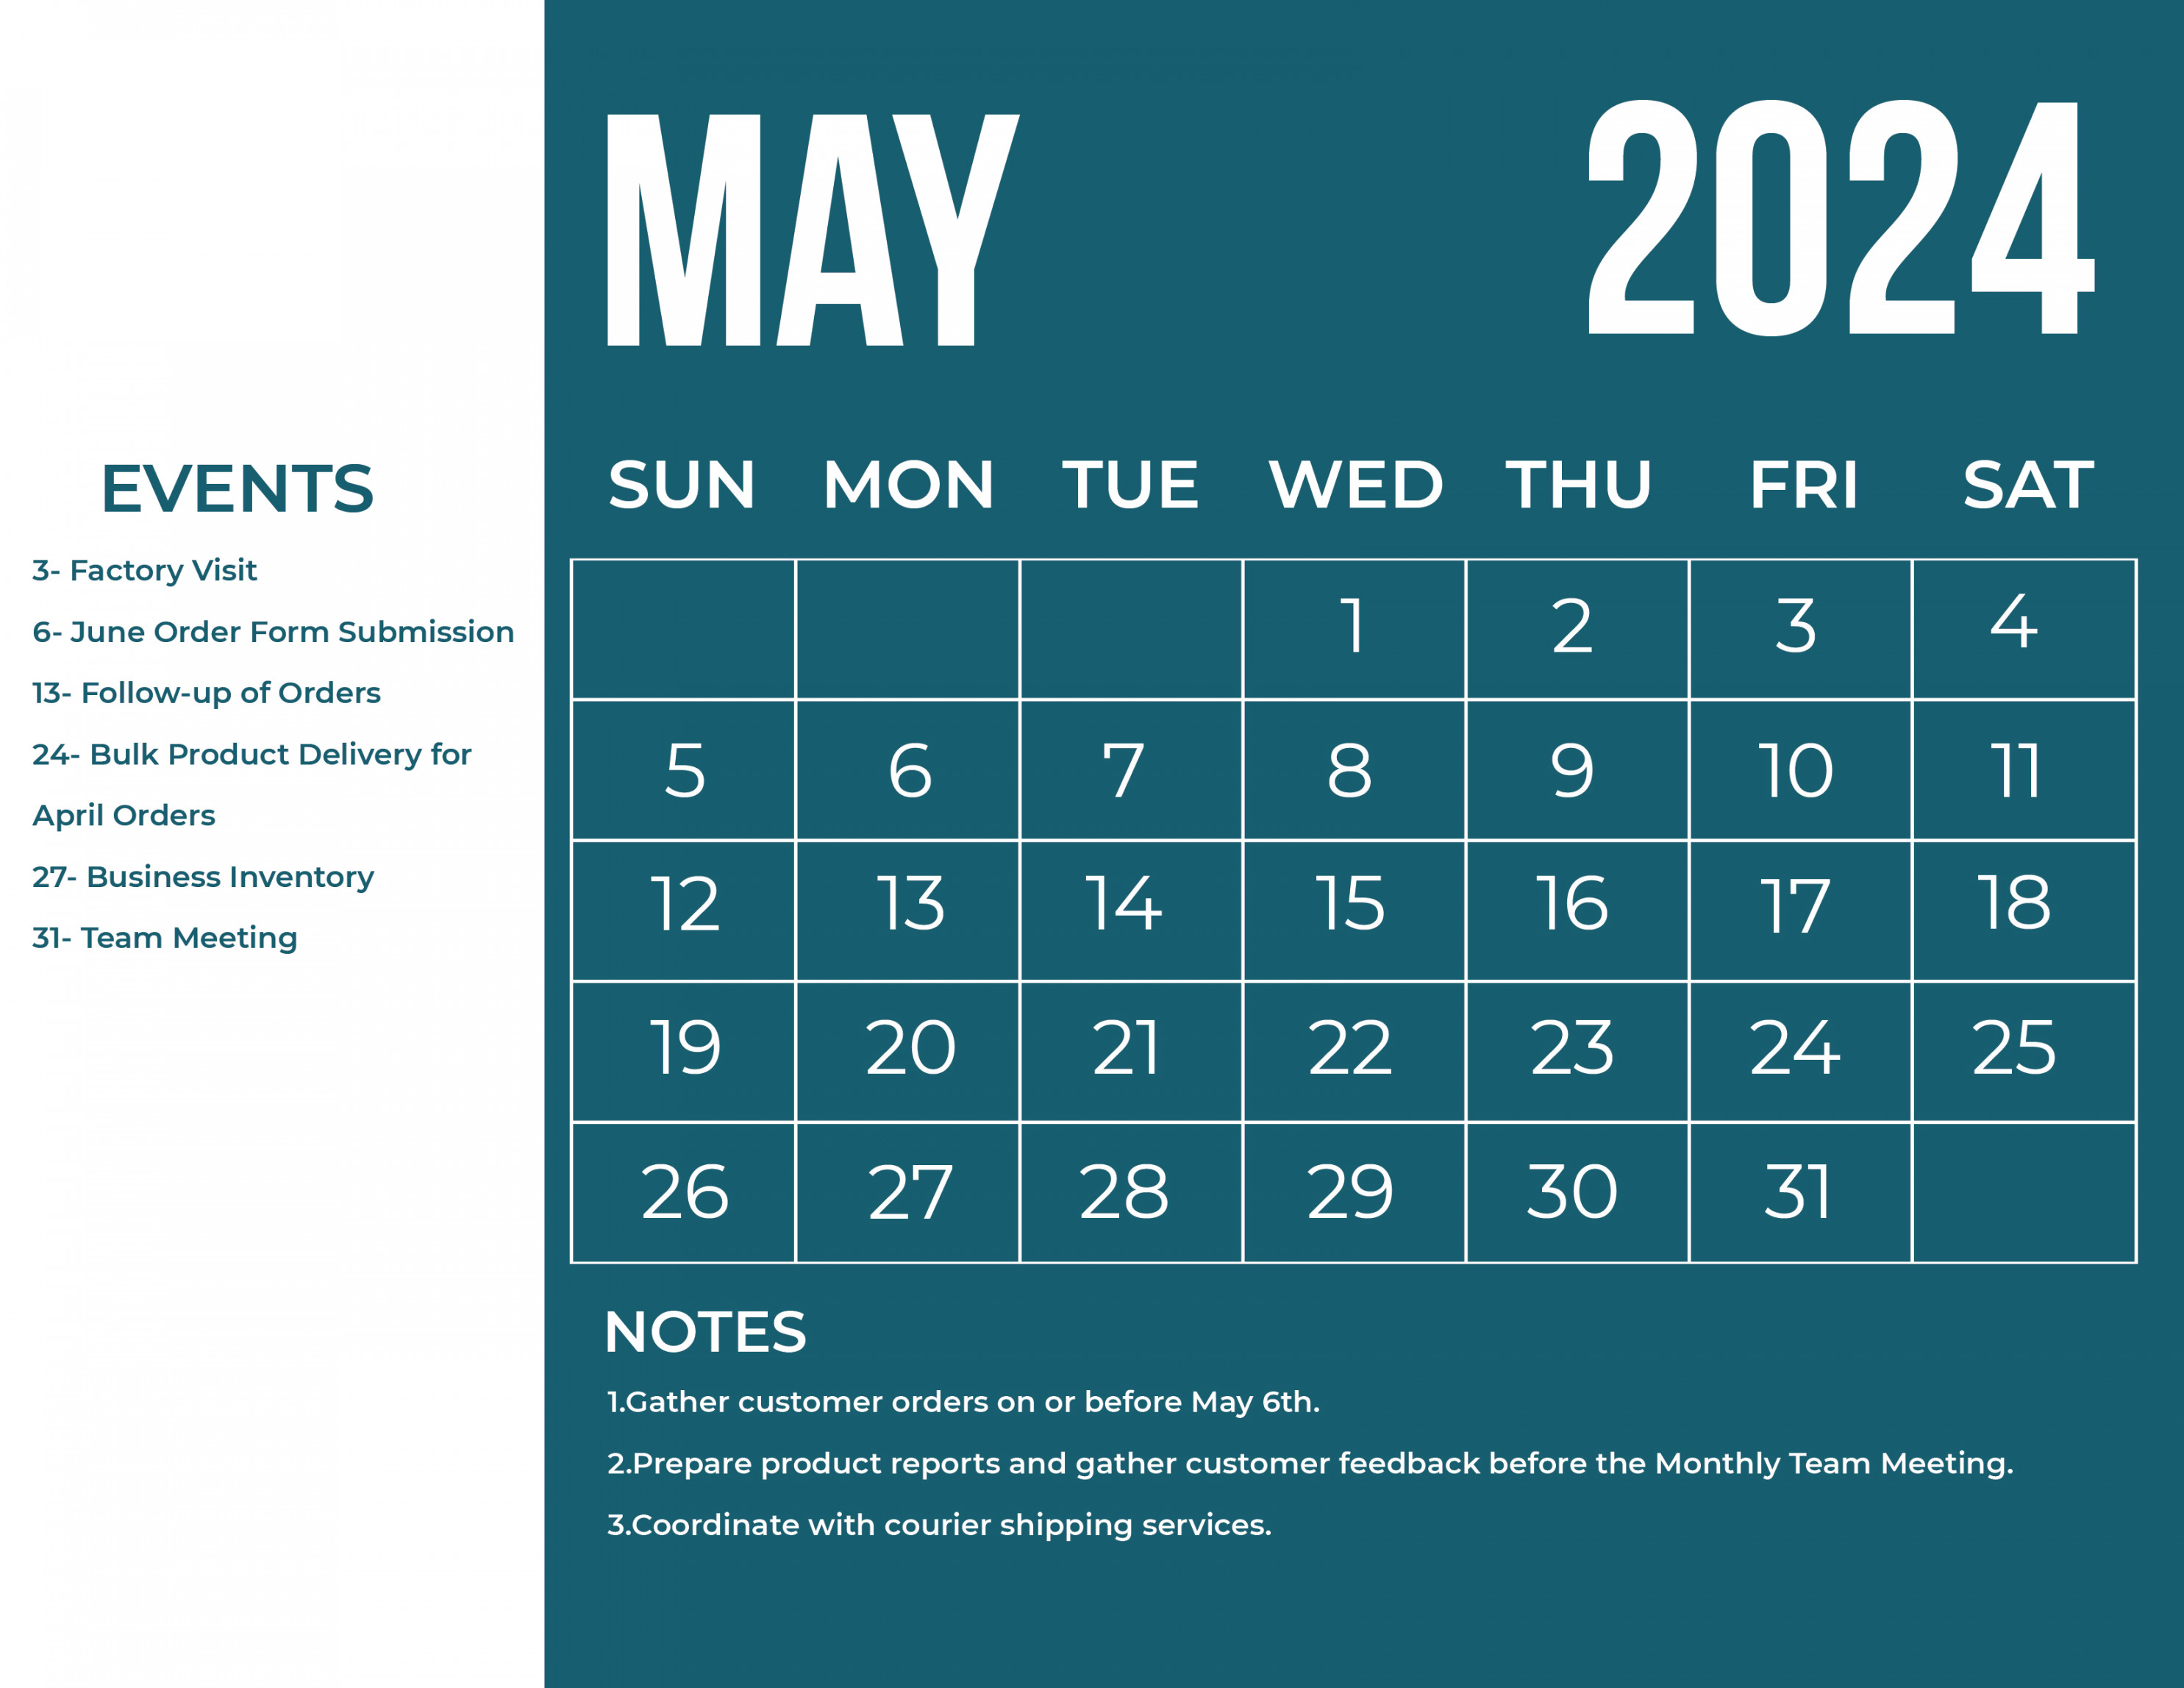 May Calendar Download in Word, Illustrator, EPS, SVG, JPG